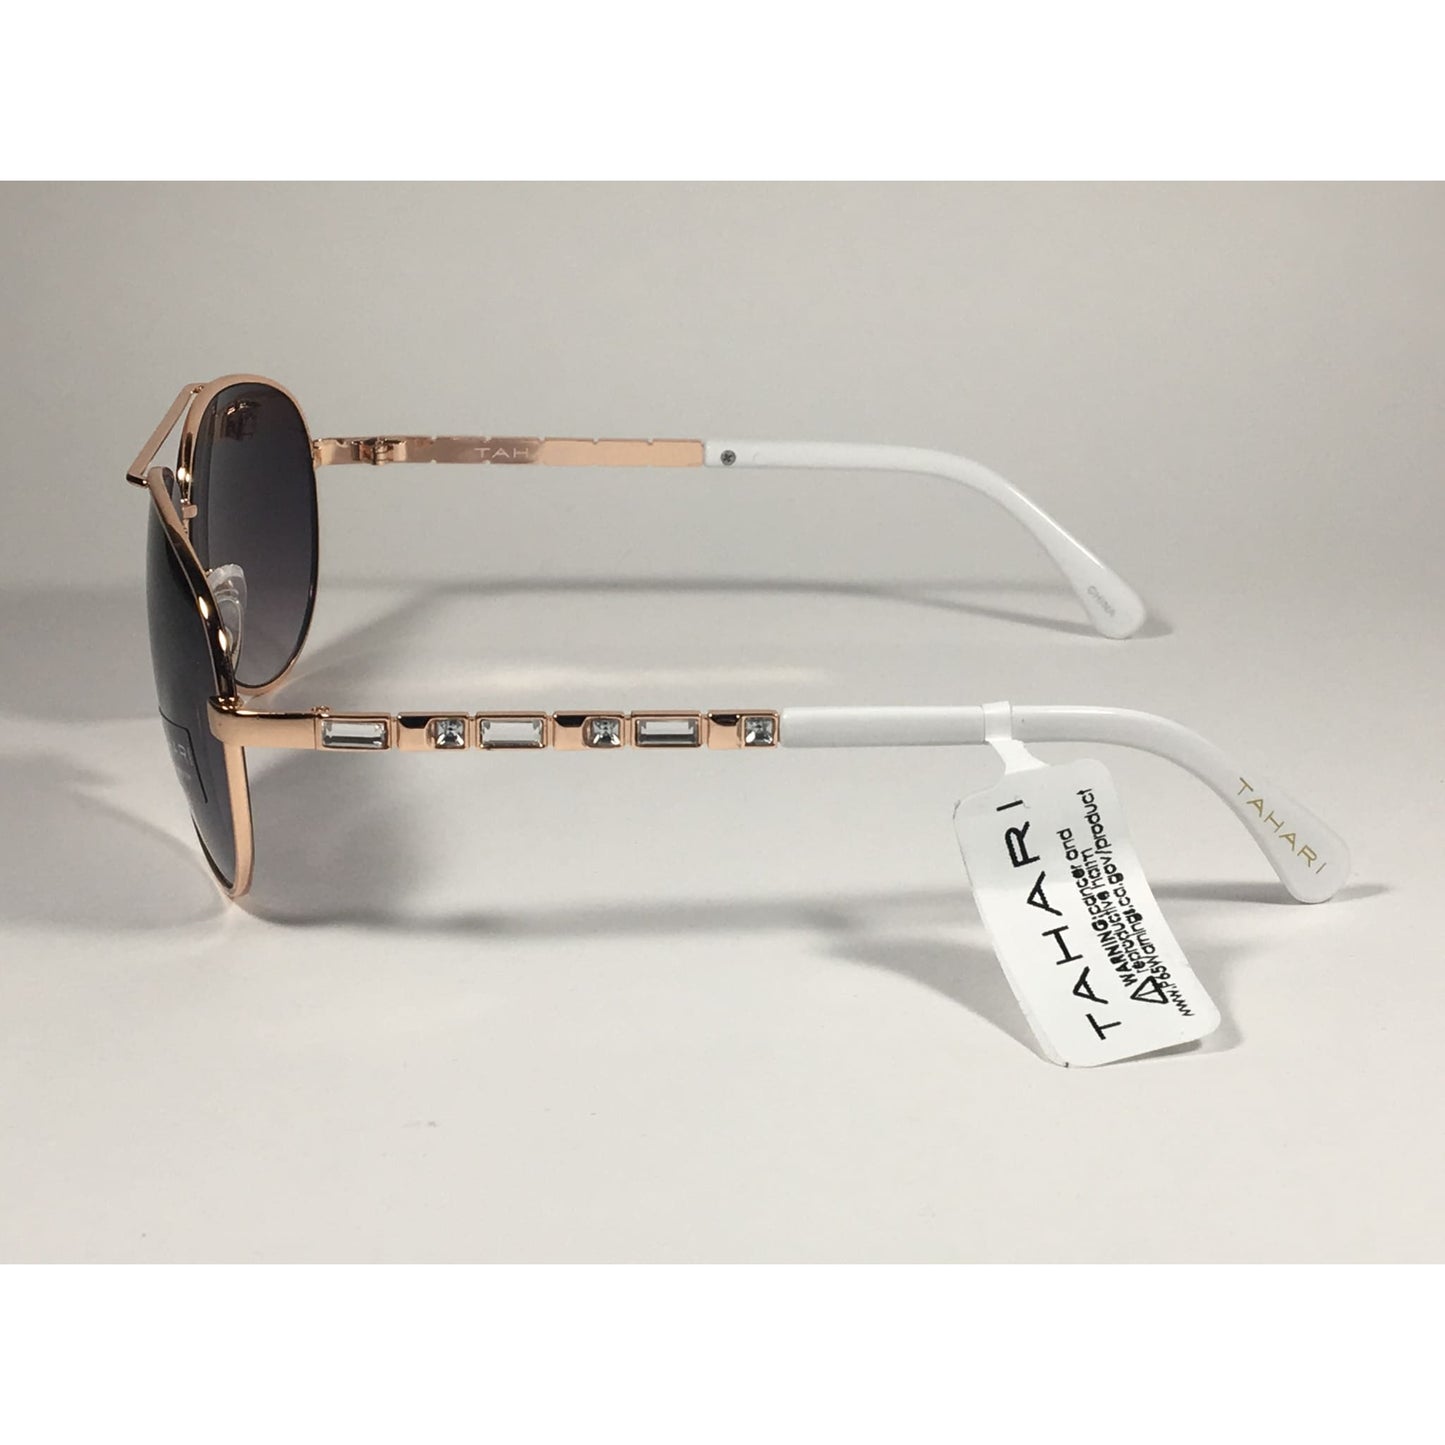 Tahari Aviator Pilot Sunglasses Rhinestone Jewels Rose Gold White Frame Smoke Gradient Lens TH737 RGDWH - Sunglasses